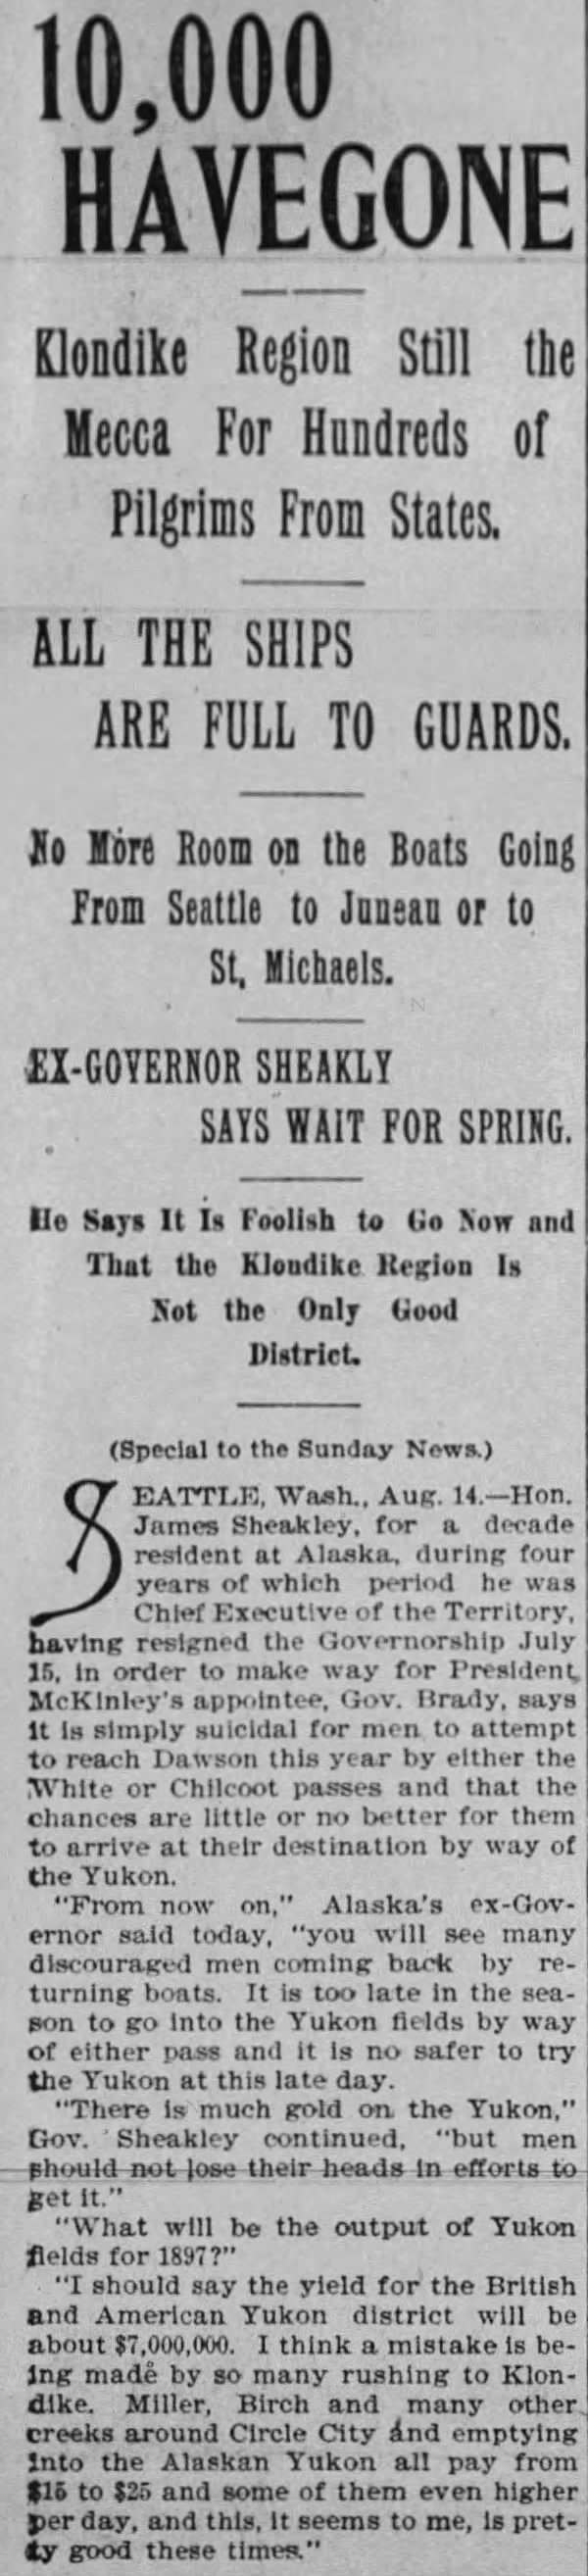 James Sheakley Resigned July 15, 1897